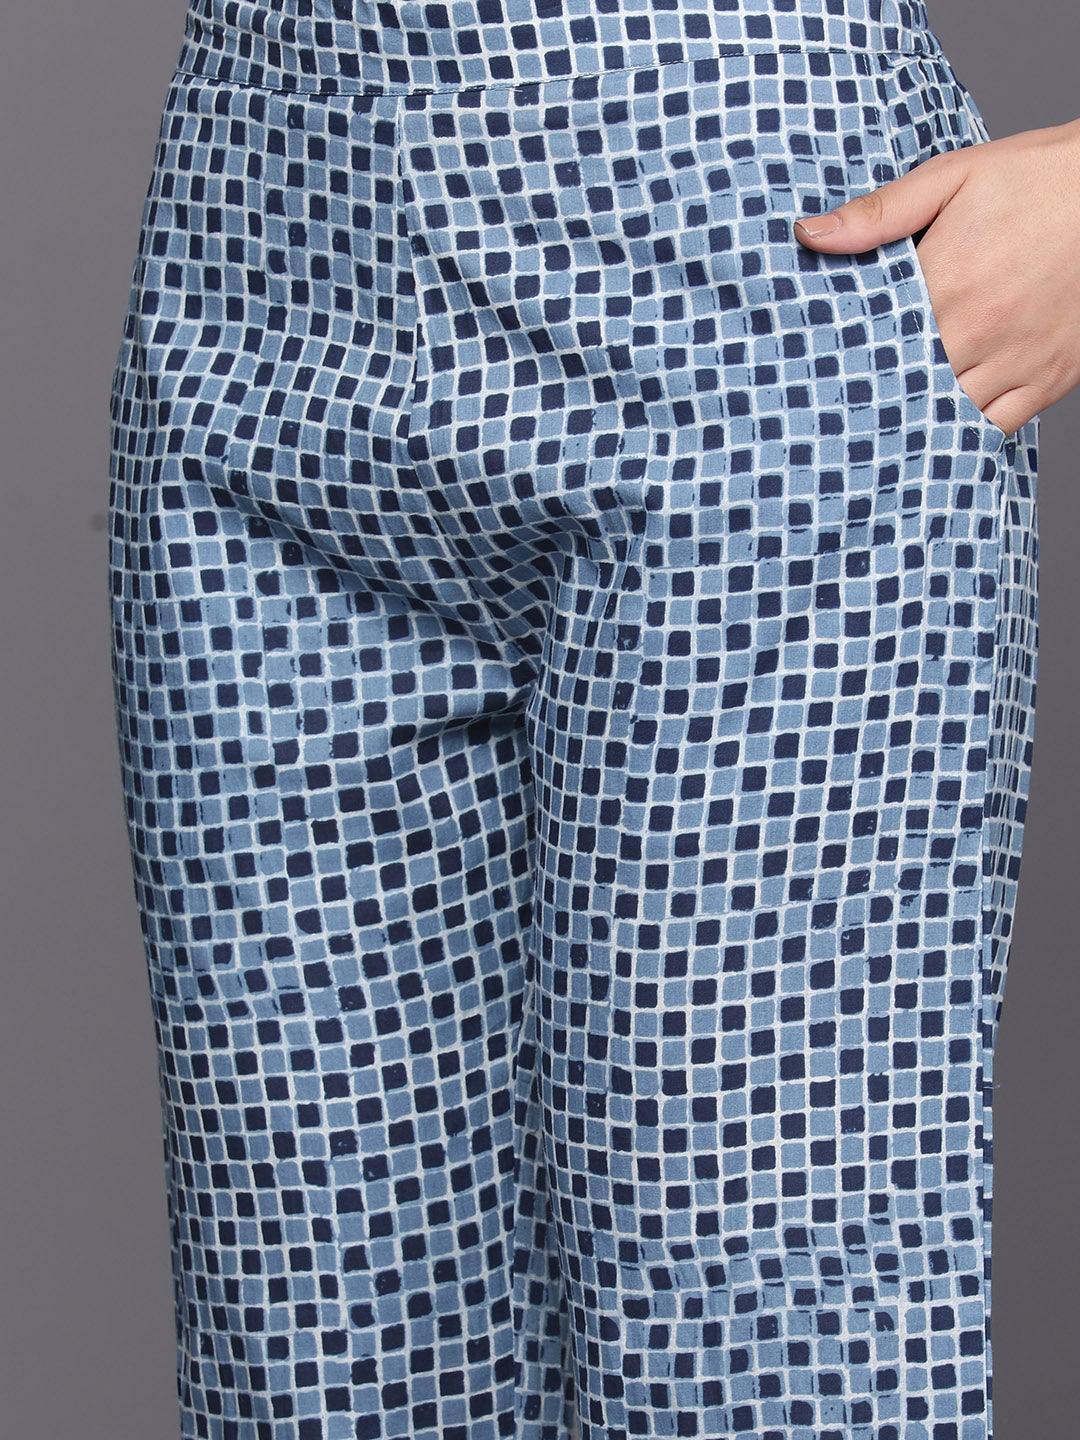 Blue Printed Cotton A-Line Suit Set With Trousers - ShopLibas